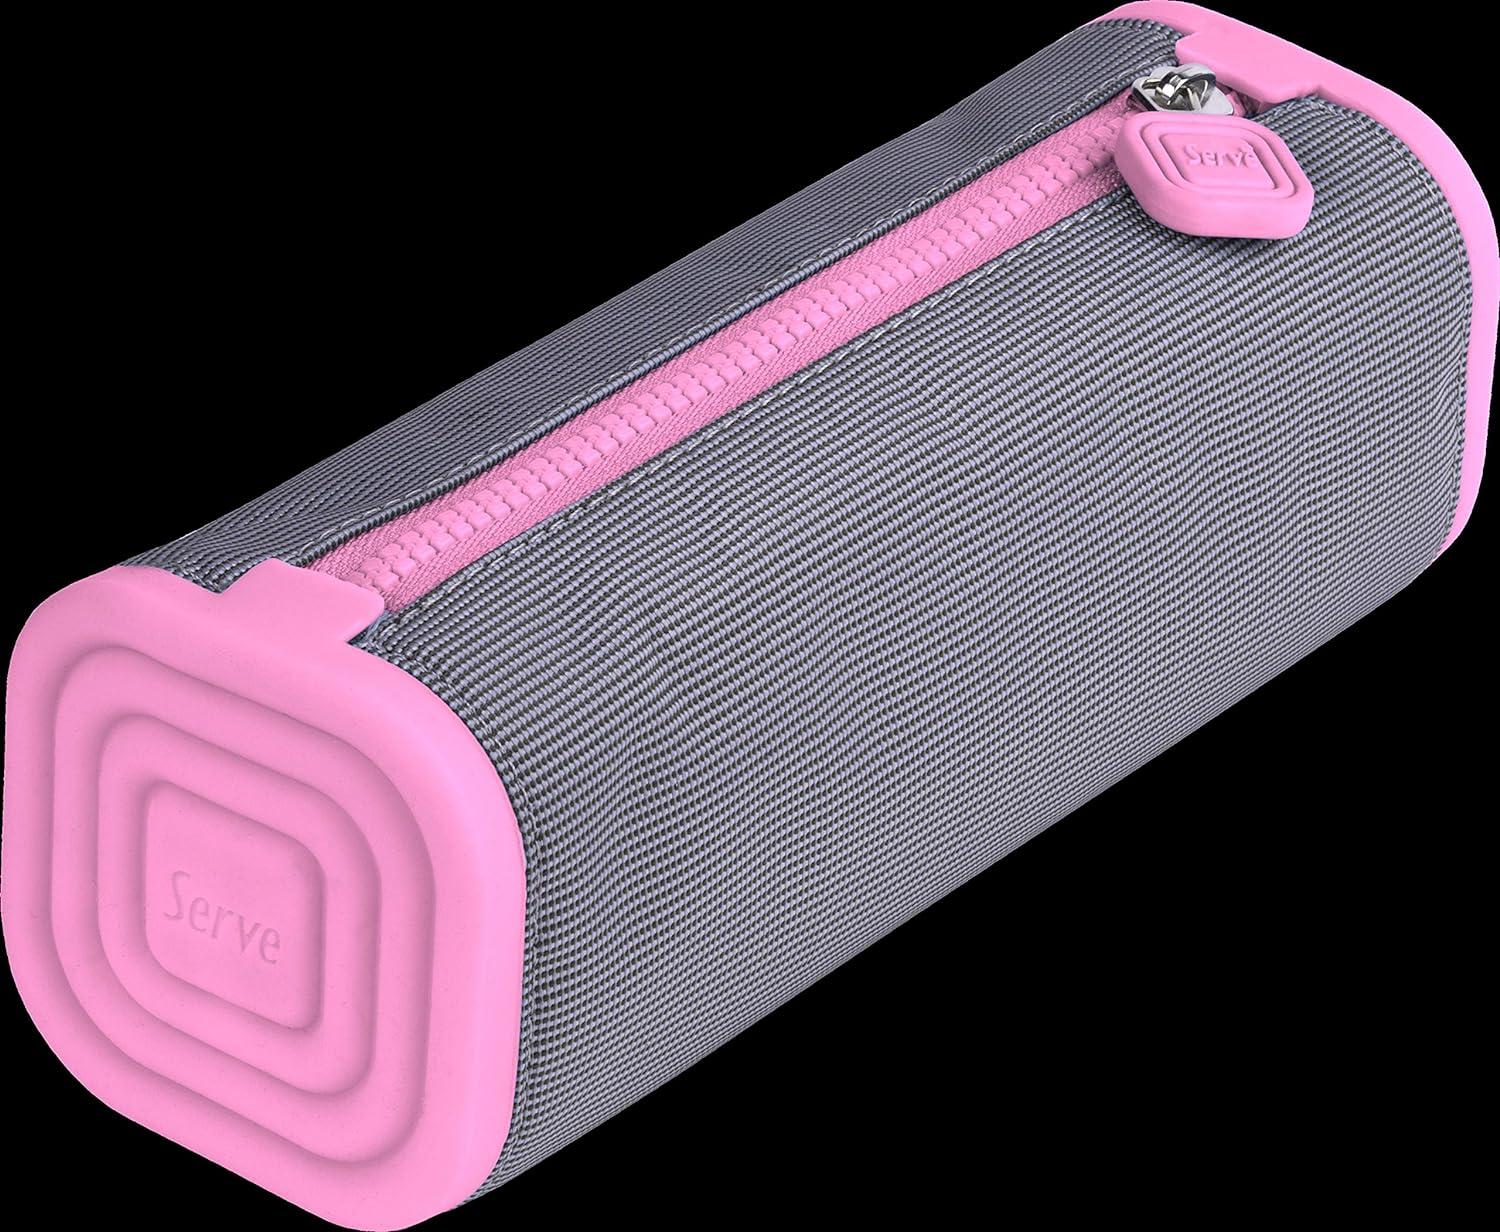 serve prismo square pencil case light gray and candy pink  serve b08pz4665b